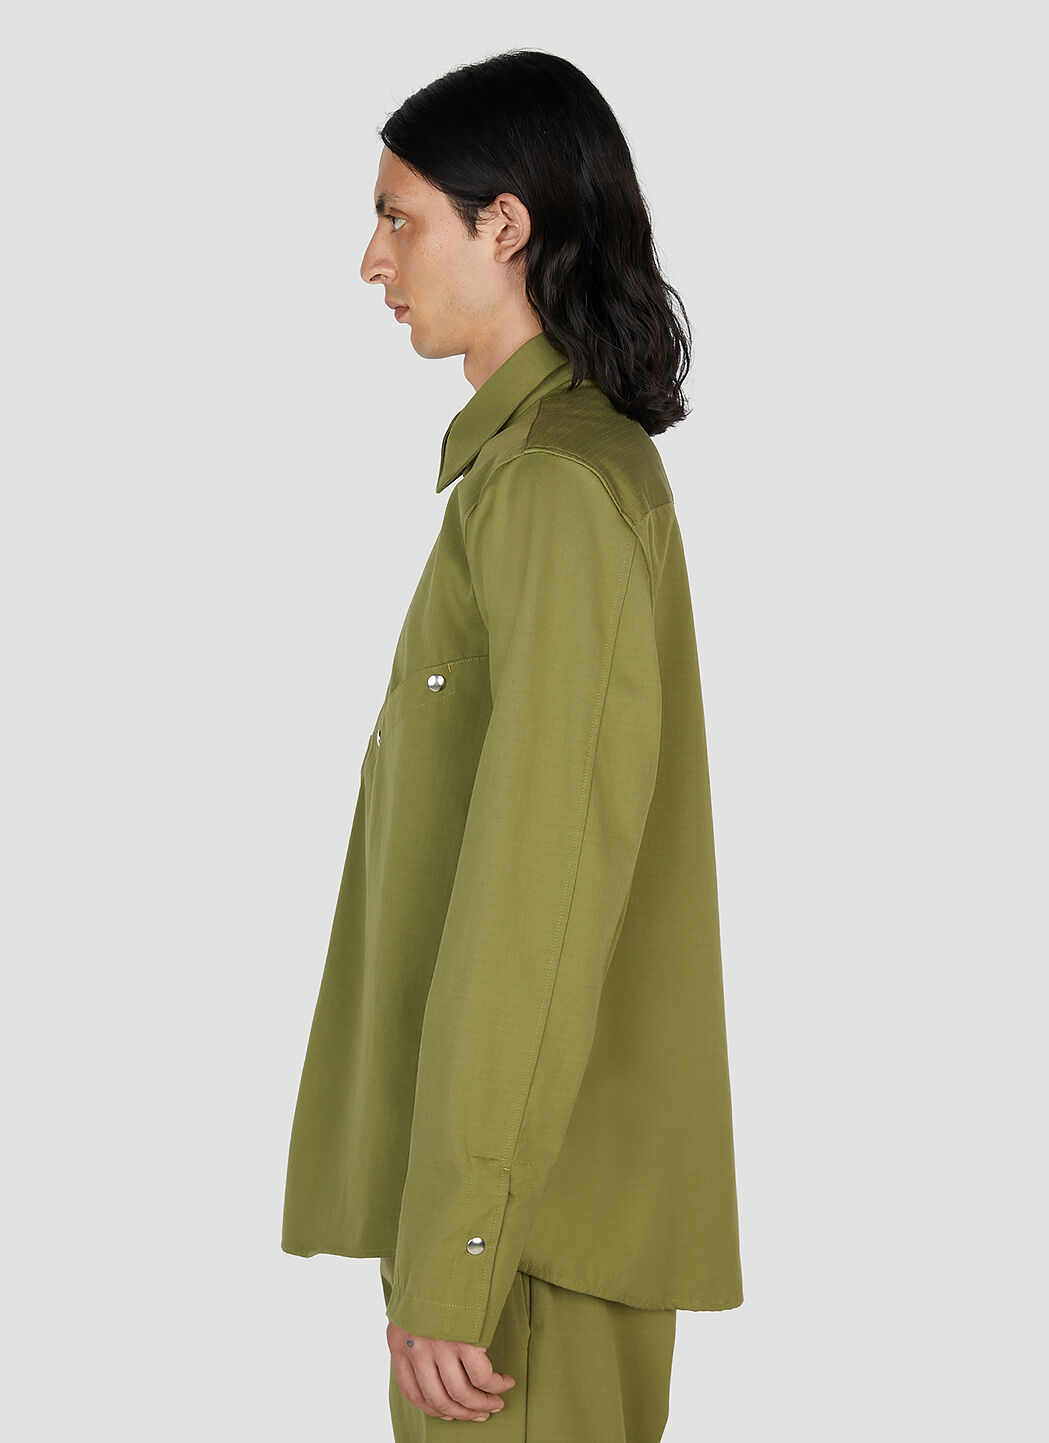 Ranra Jor Shirt in Green | LN-CC®